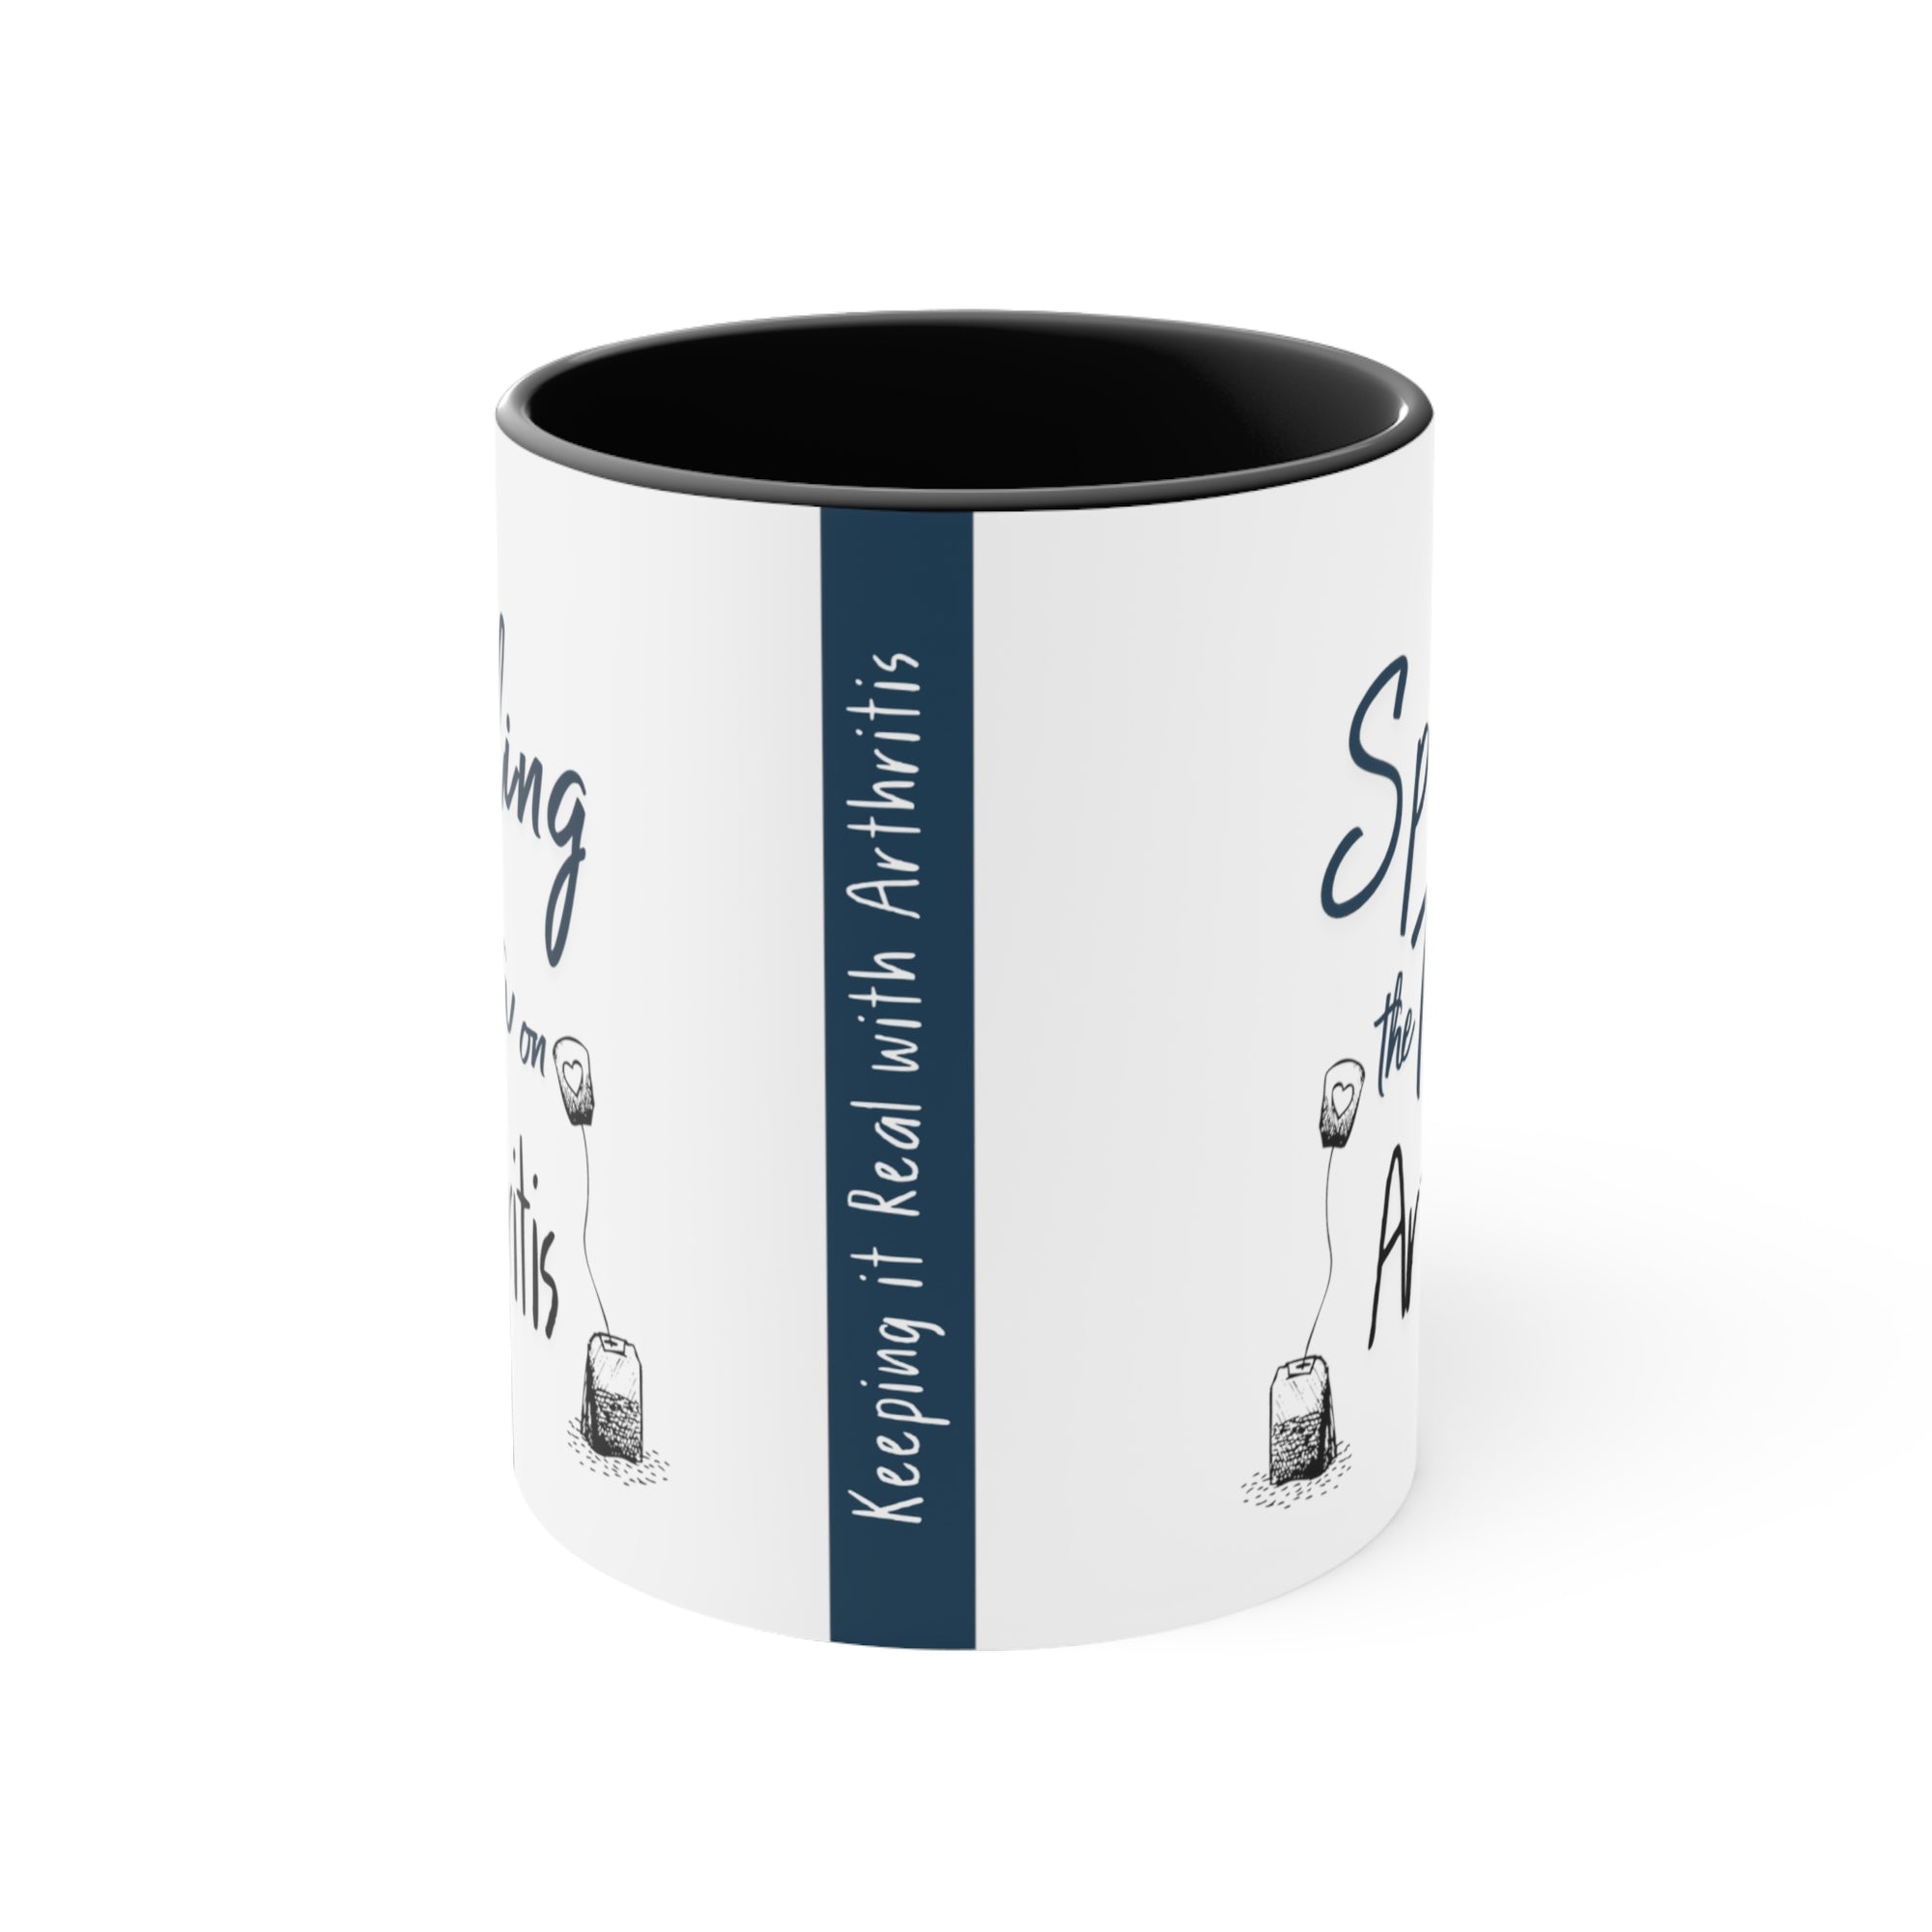 "Spilling the Tea on Arthritis" # 2 -11 oz. Two-Tone Mug